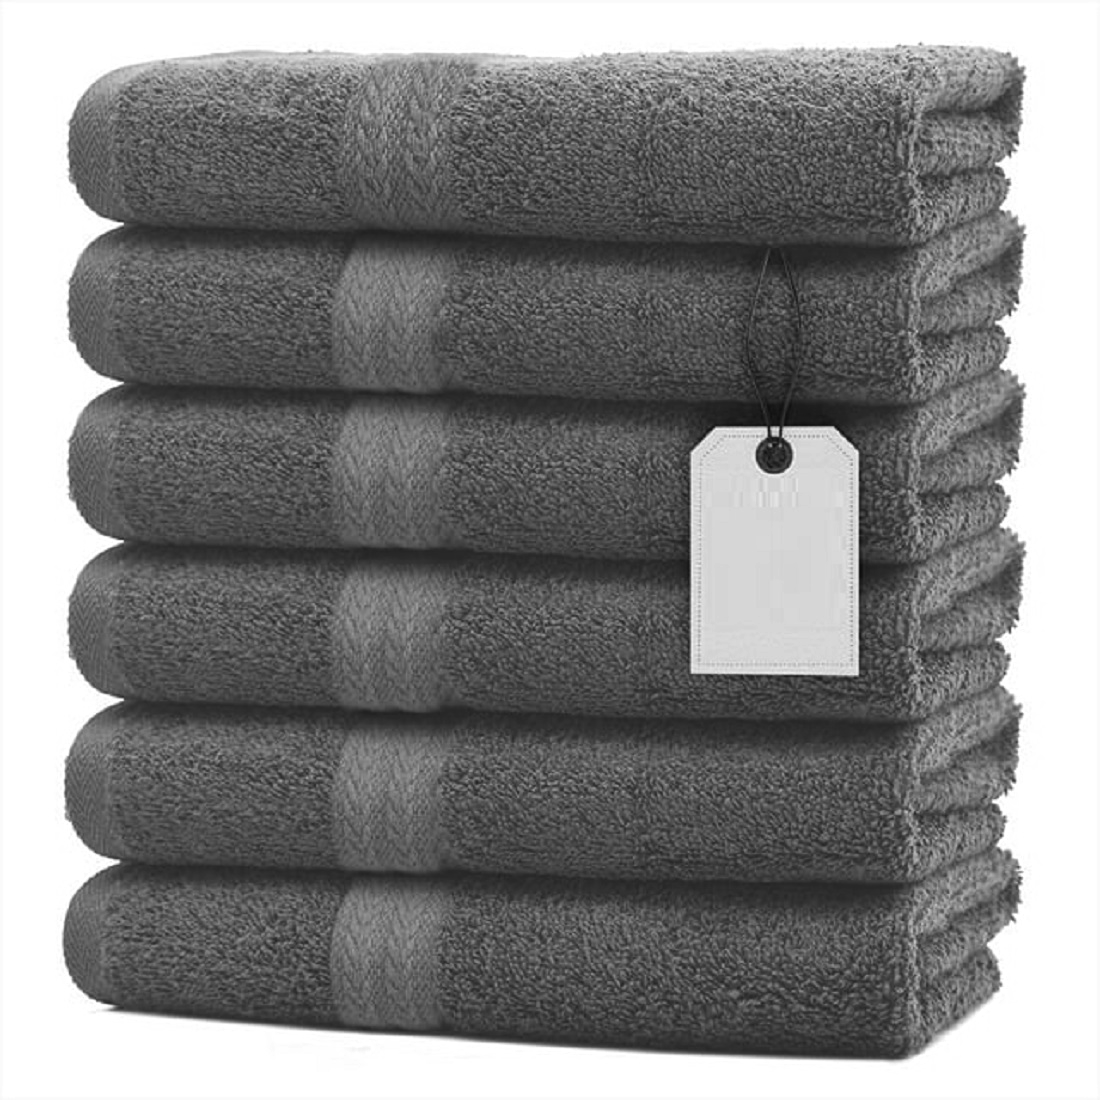 Pack of 3 & 6 Big Bath Sheets 100% Cotton Large Size Bathroom Towels